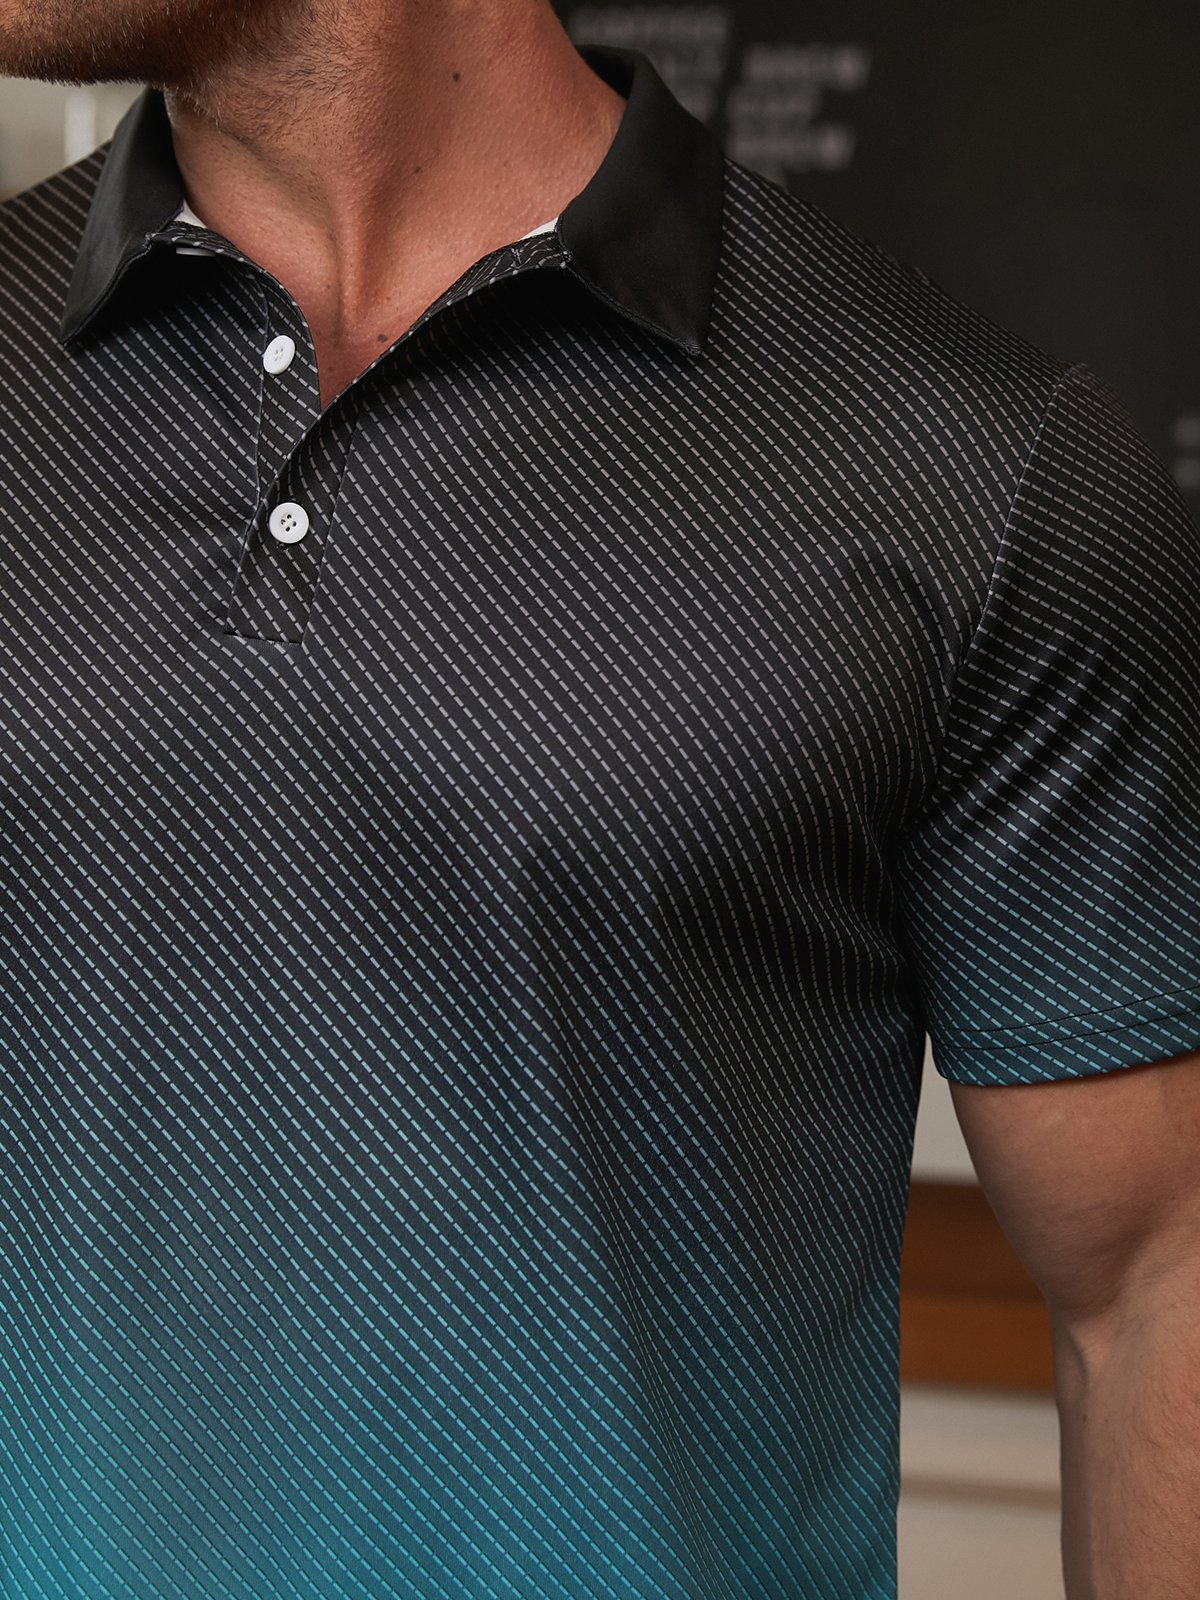 Hardaddy Black-green Abstract Gradient Geometric Regular Fit Button Short Sleeve Golf Polo Shirt